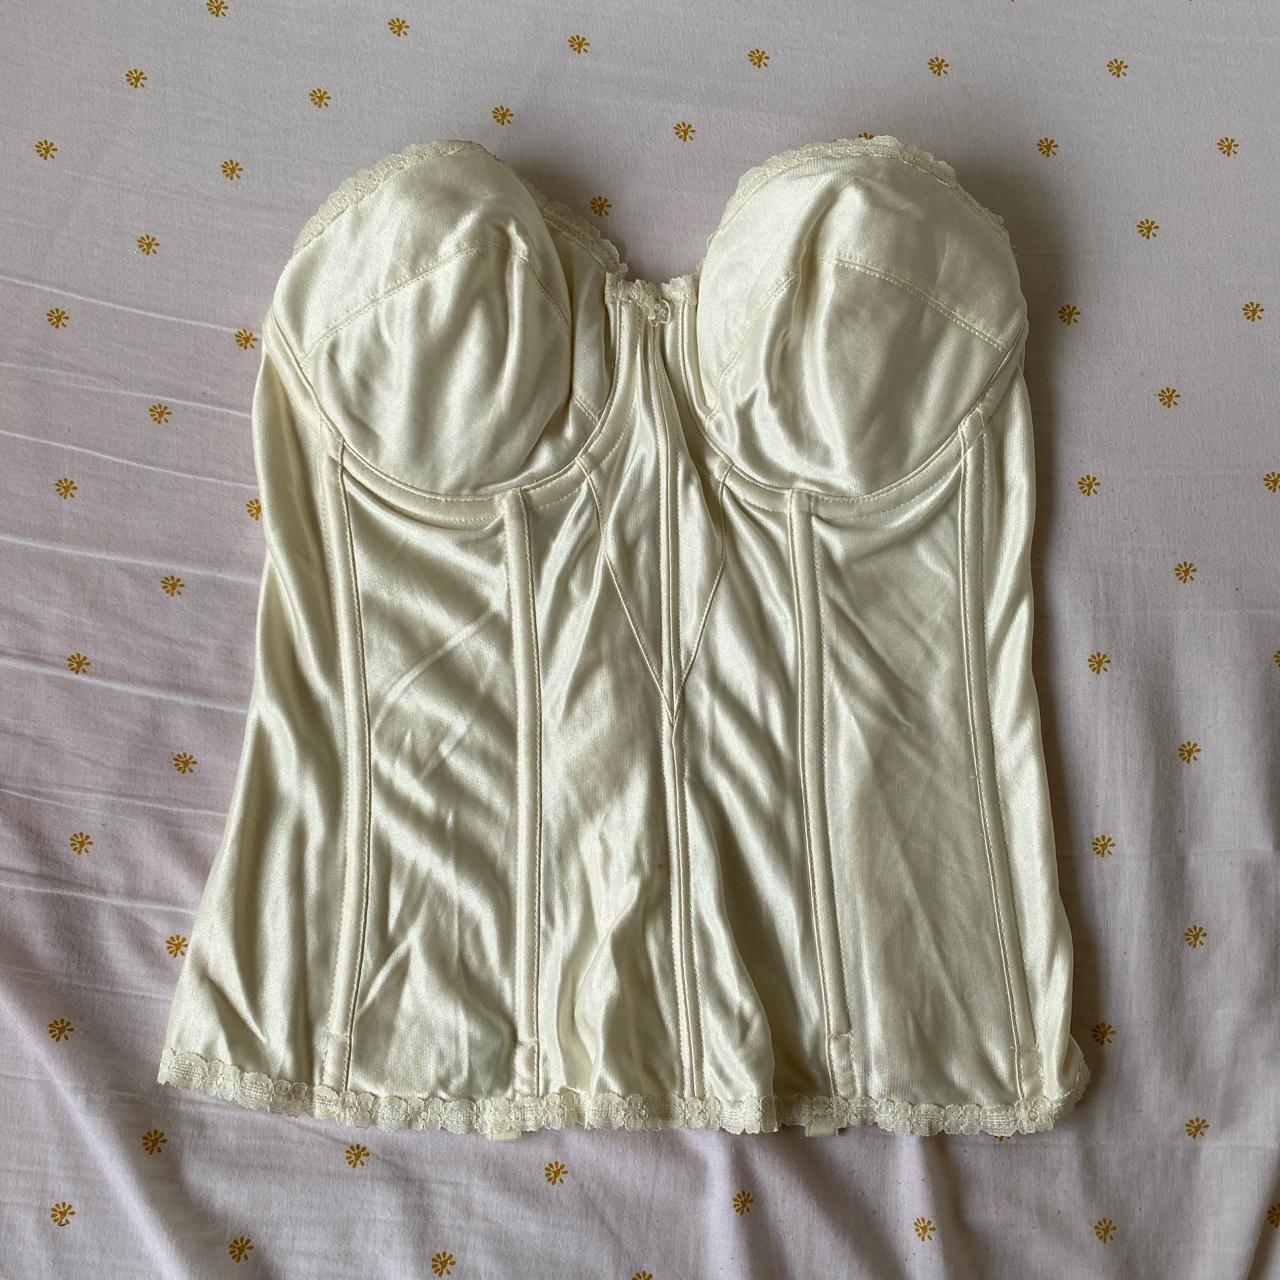 Cream vintage satin bustier corset top Size 36C Good... - Depop